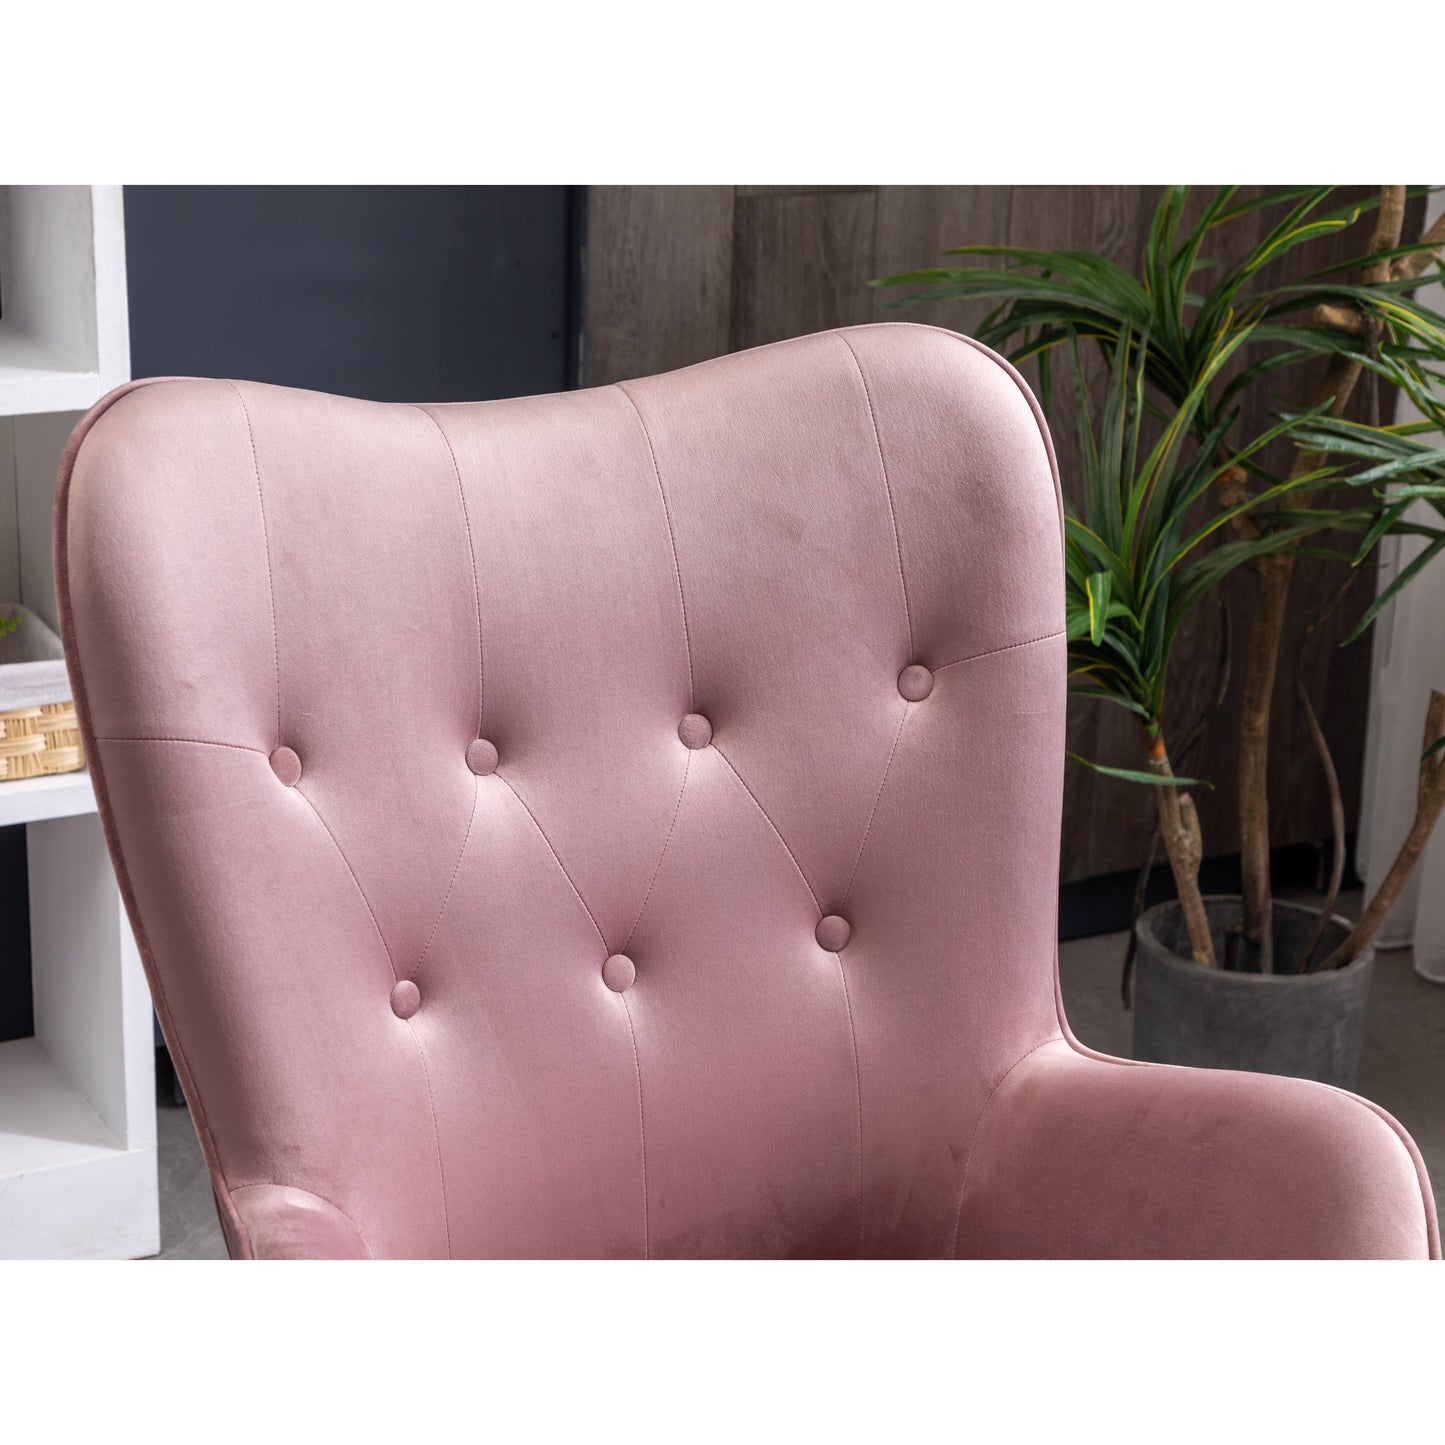 Doarnin Contemporary Silky Velvet Tufted Button Back Accent Chair, Mauve